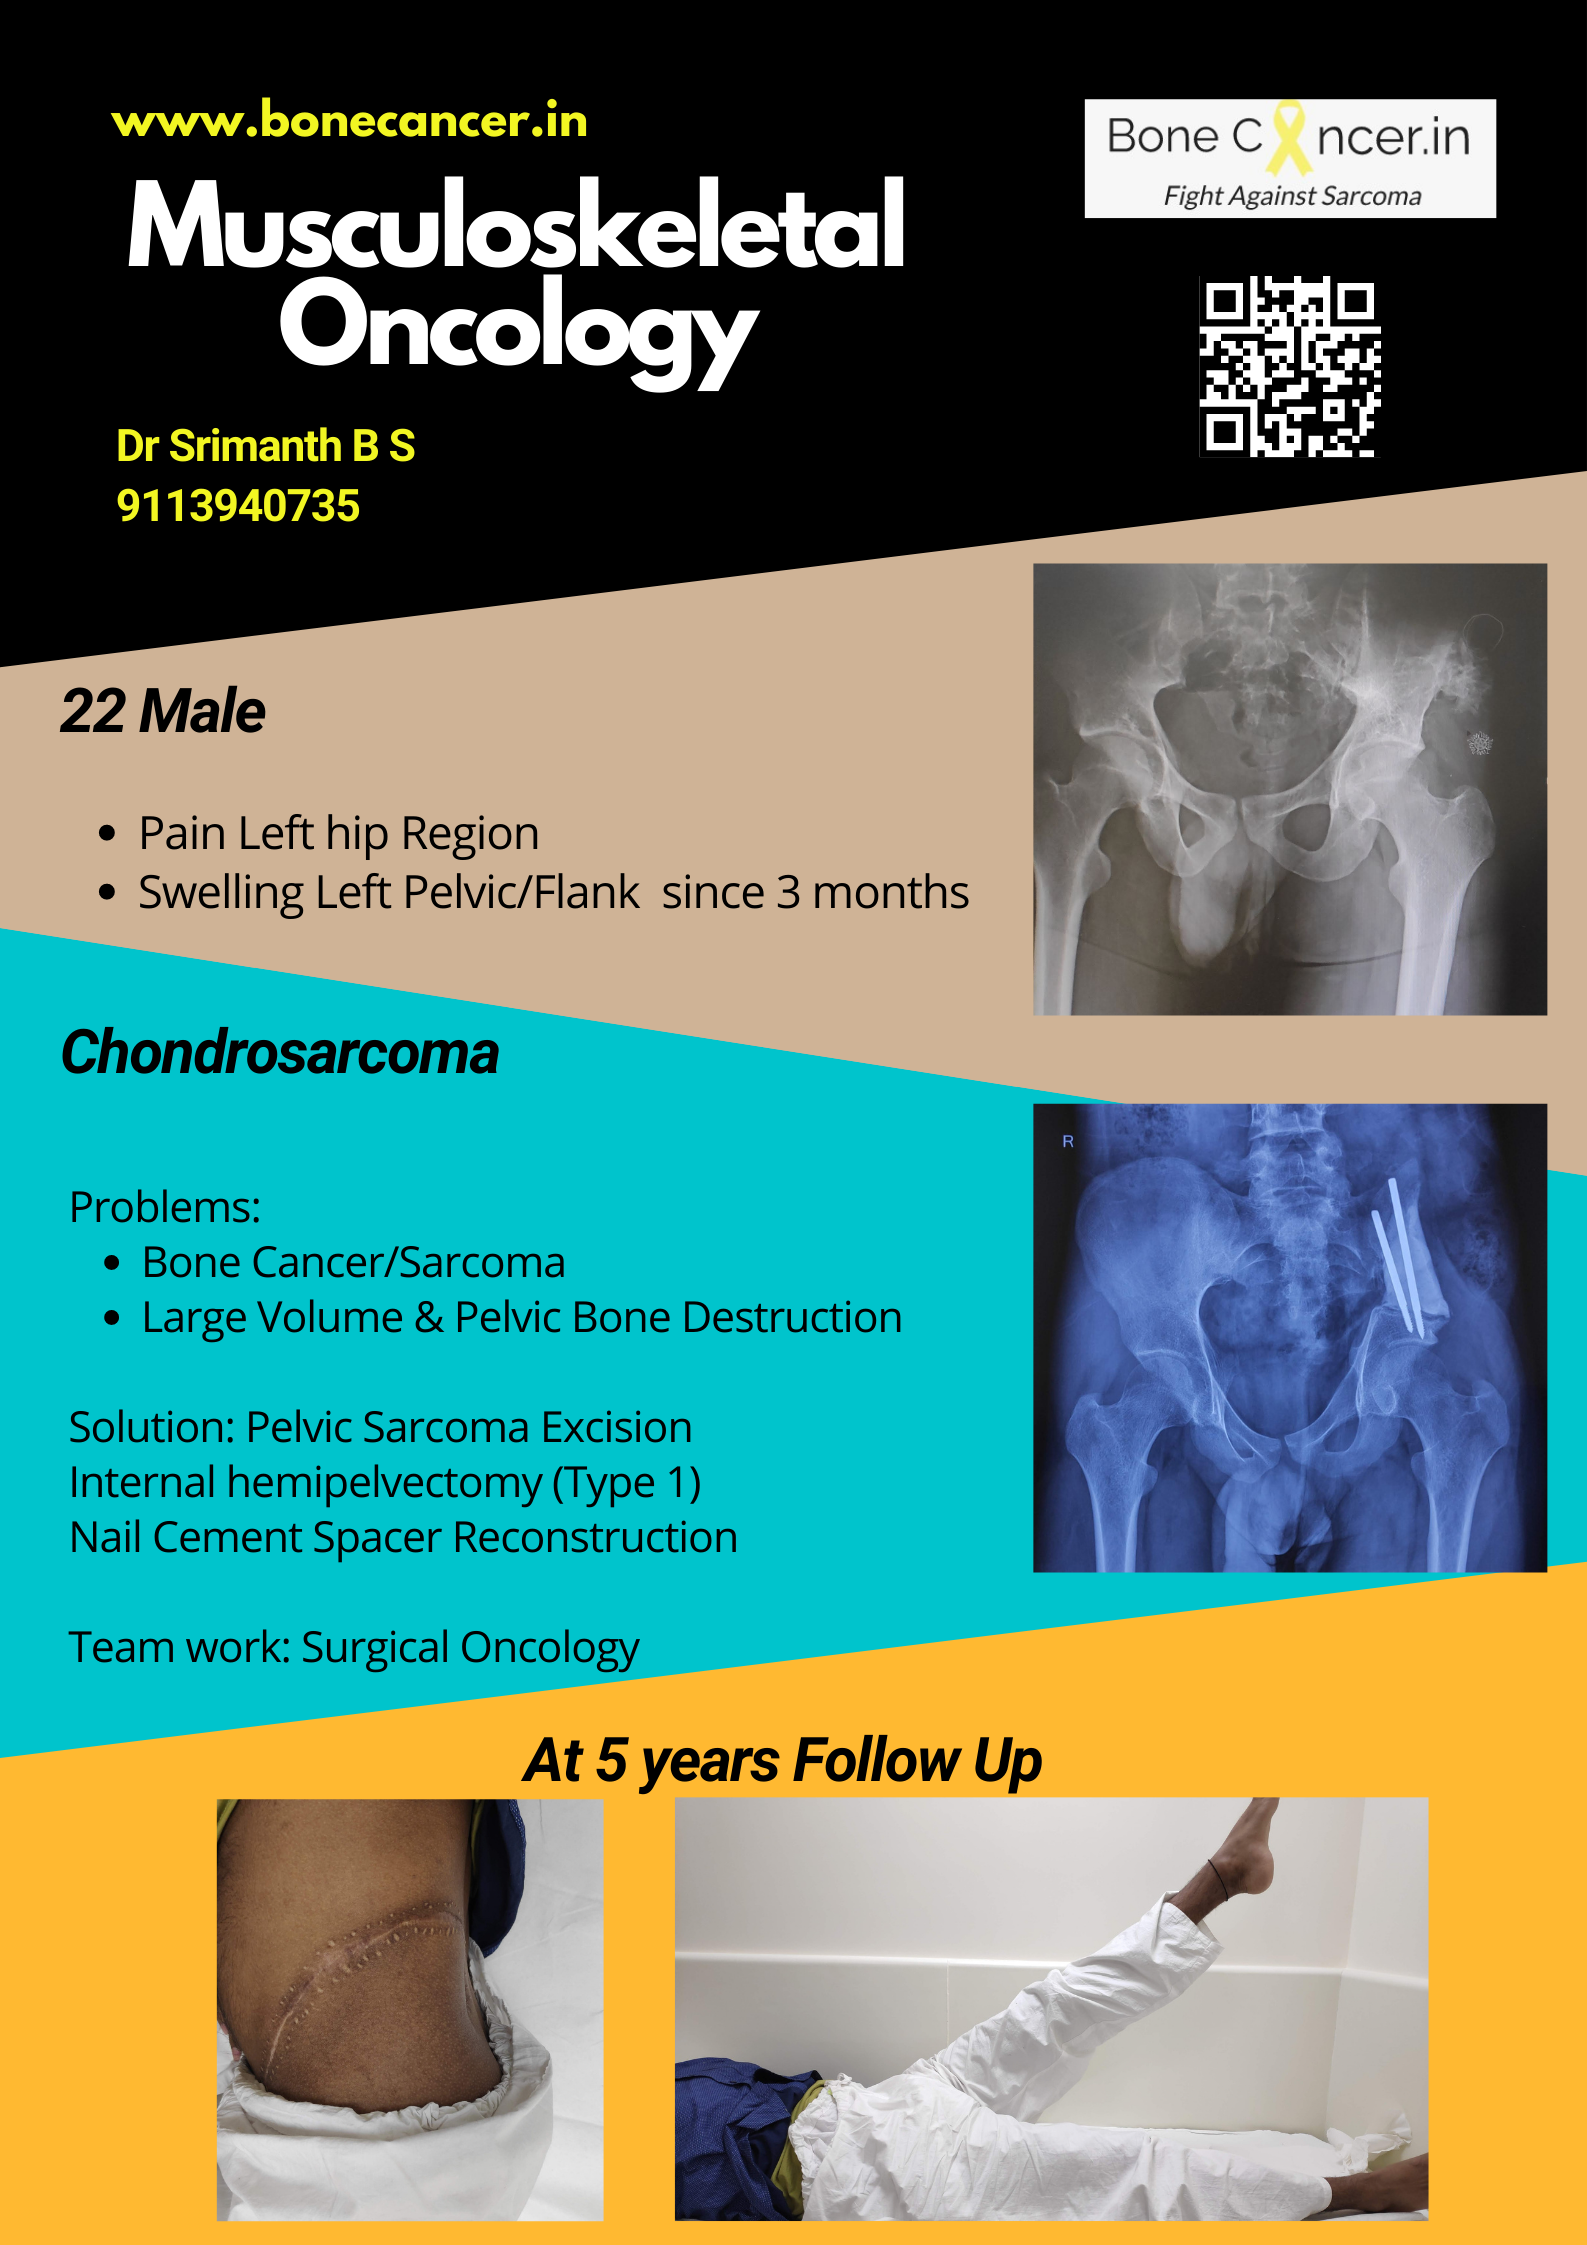 chondrosarcoma x ray